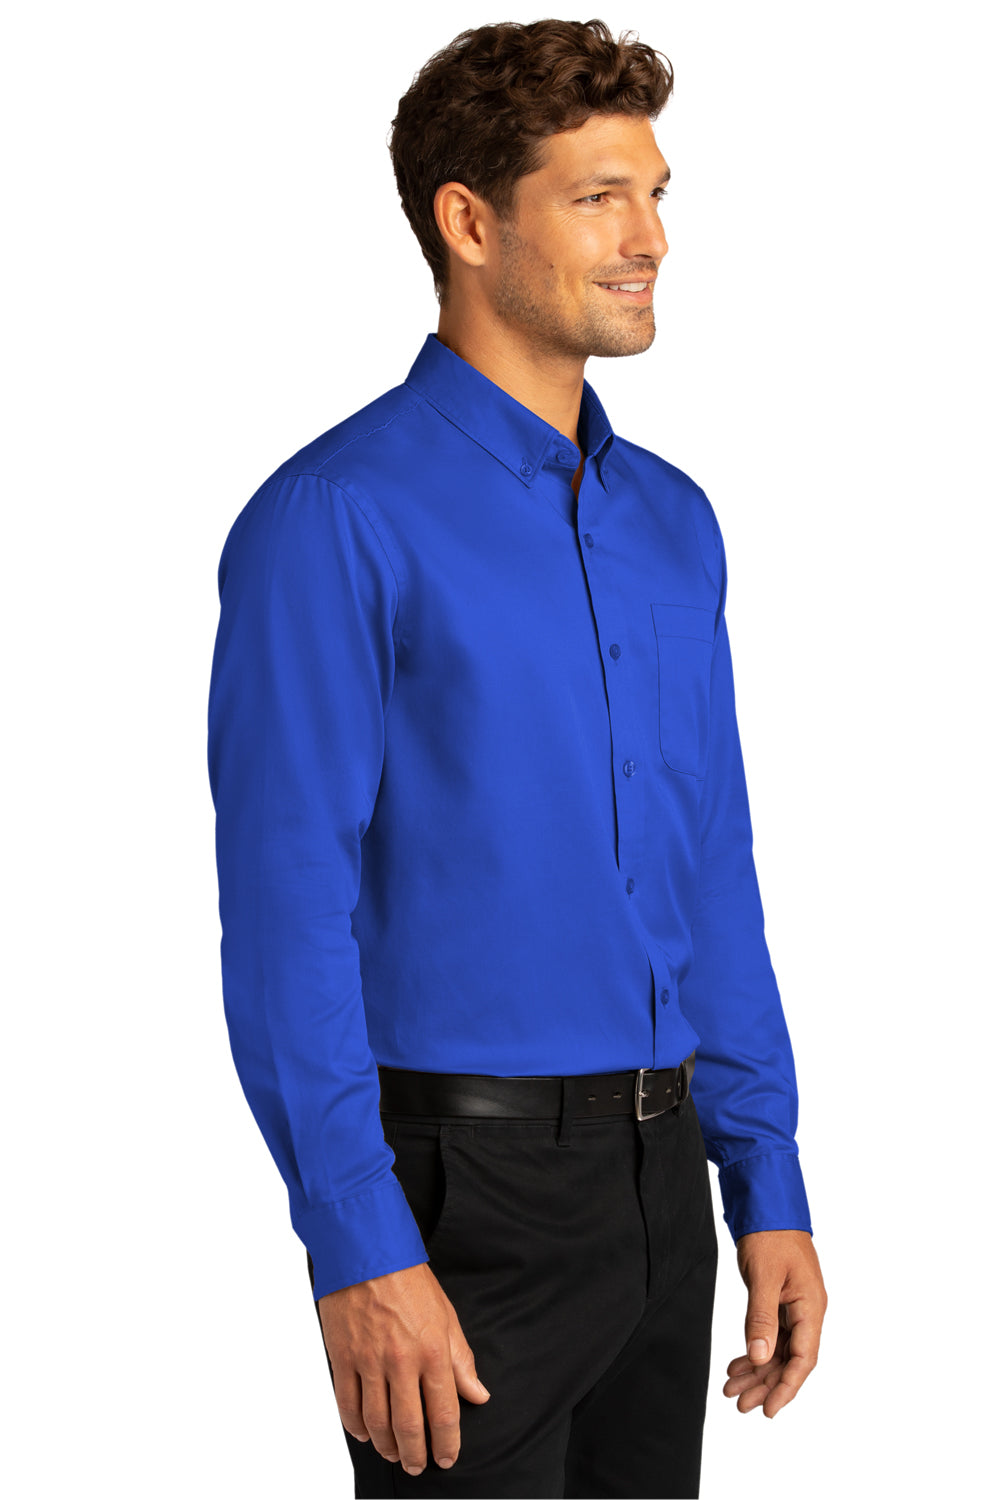 Port Authority W808 SuperPro Wrinkle Resistant React Long Sleeve Button Down Shirt w/ Pocket True Royal Blue 3Q